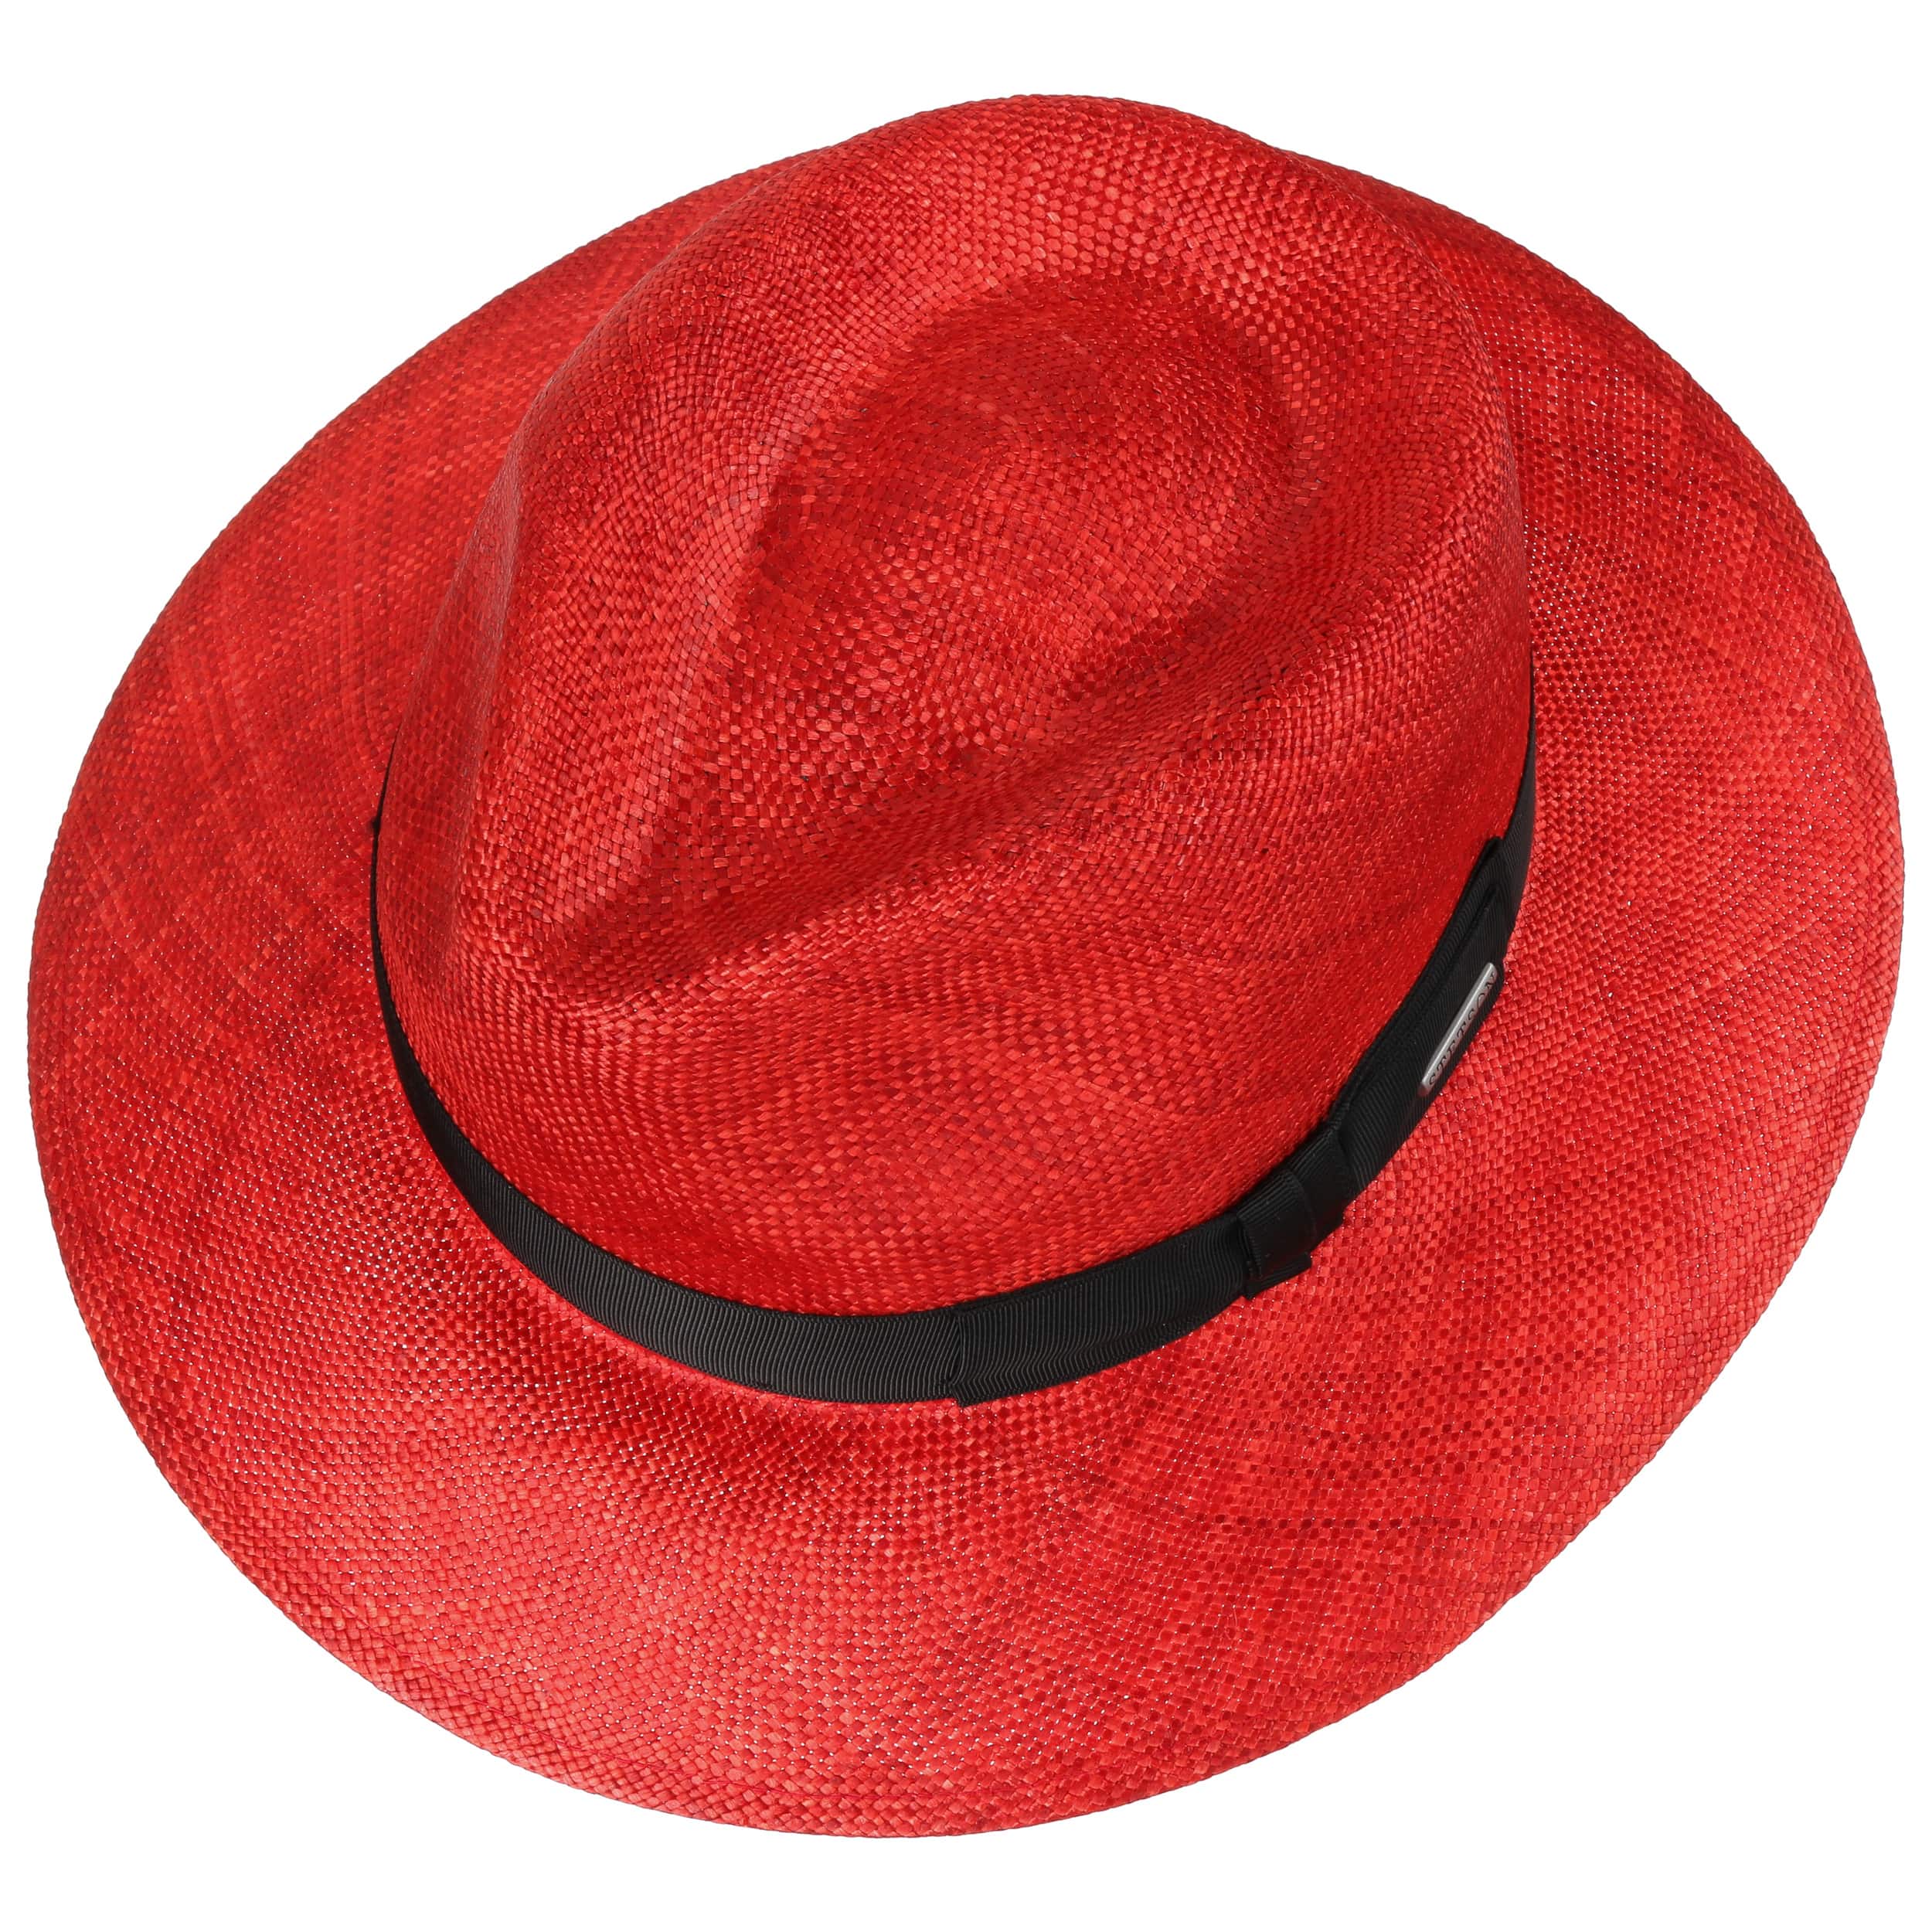 Delacon Viscose Traveller Hat by Stetson - 69,00